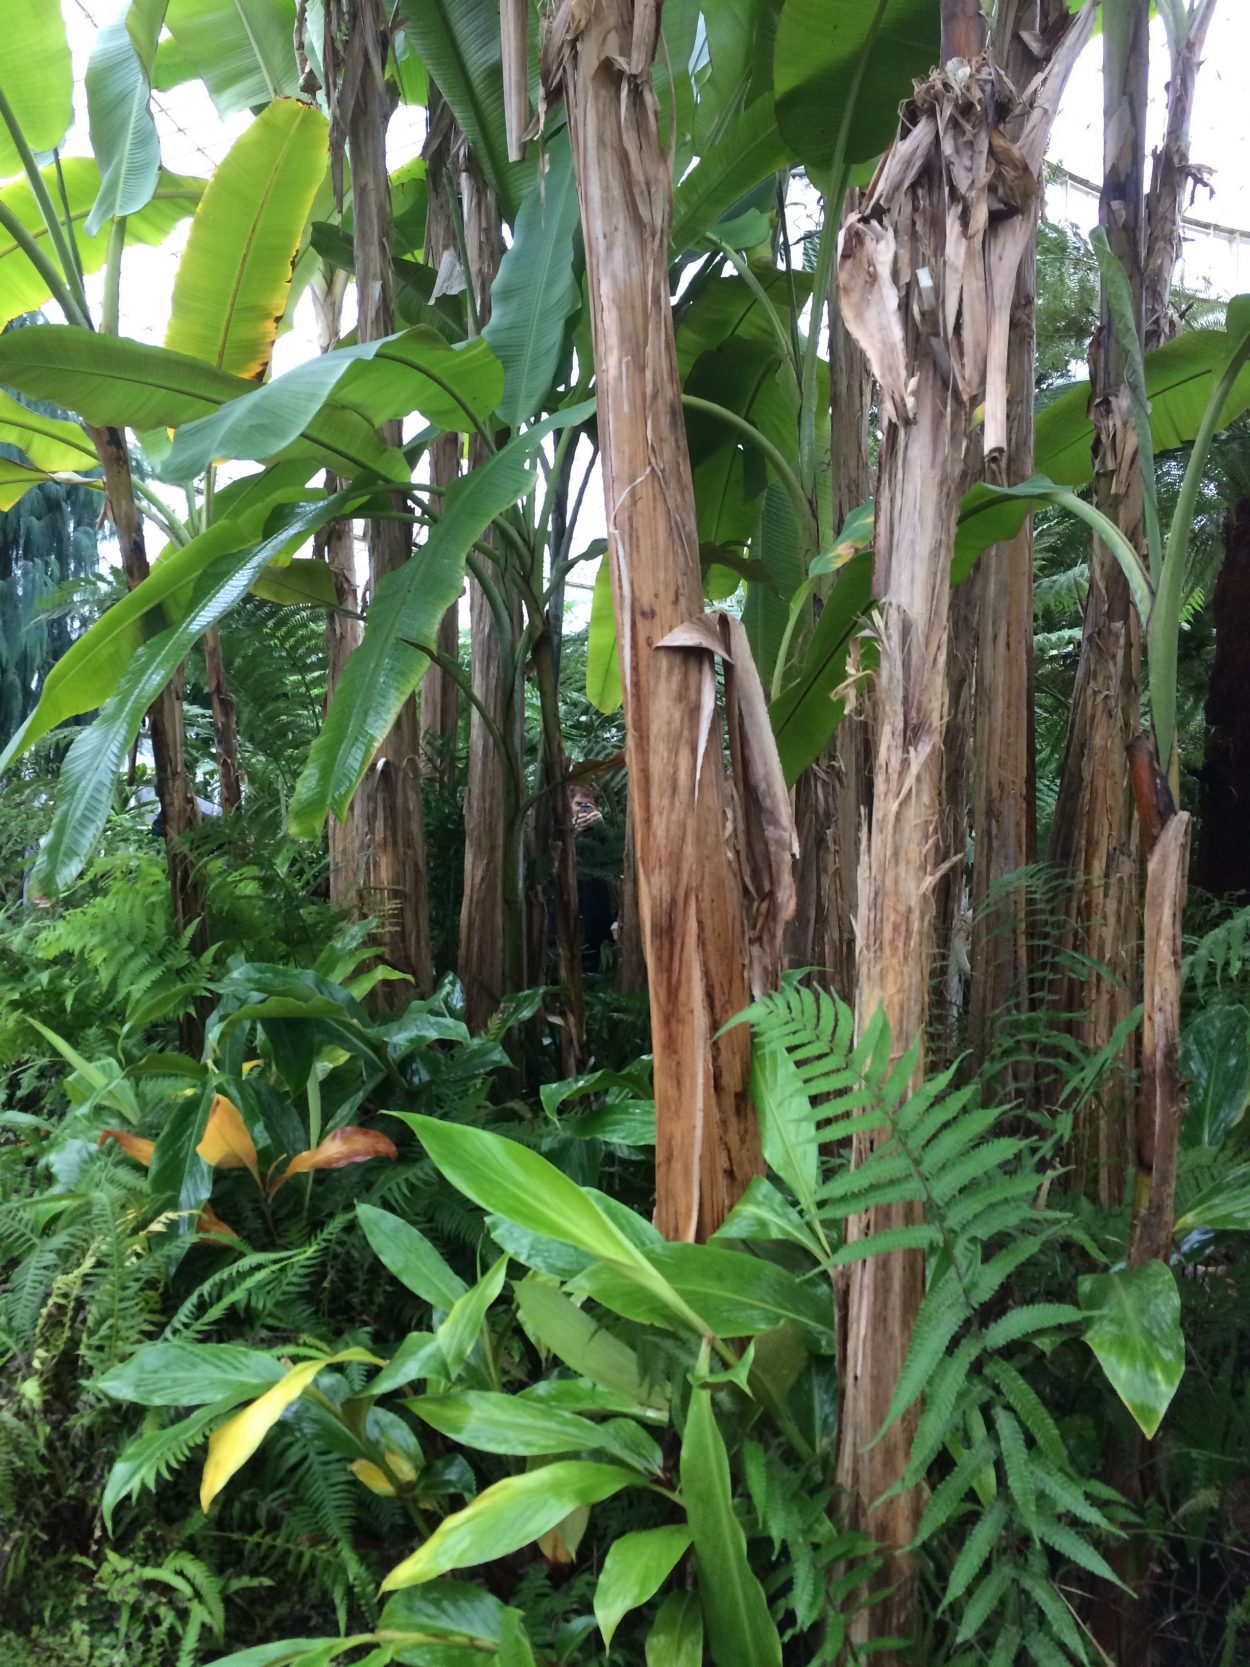 A man with a camera peeking through tropical trees